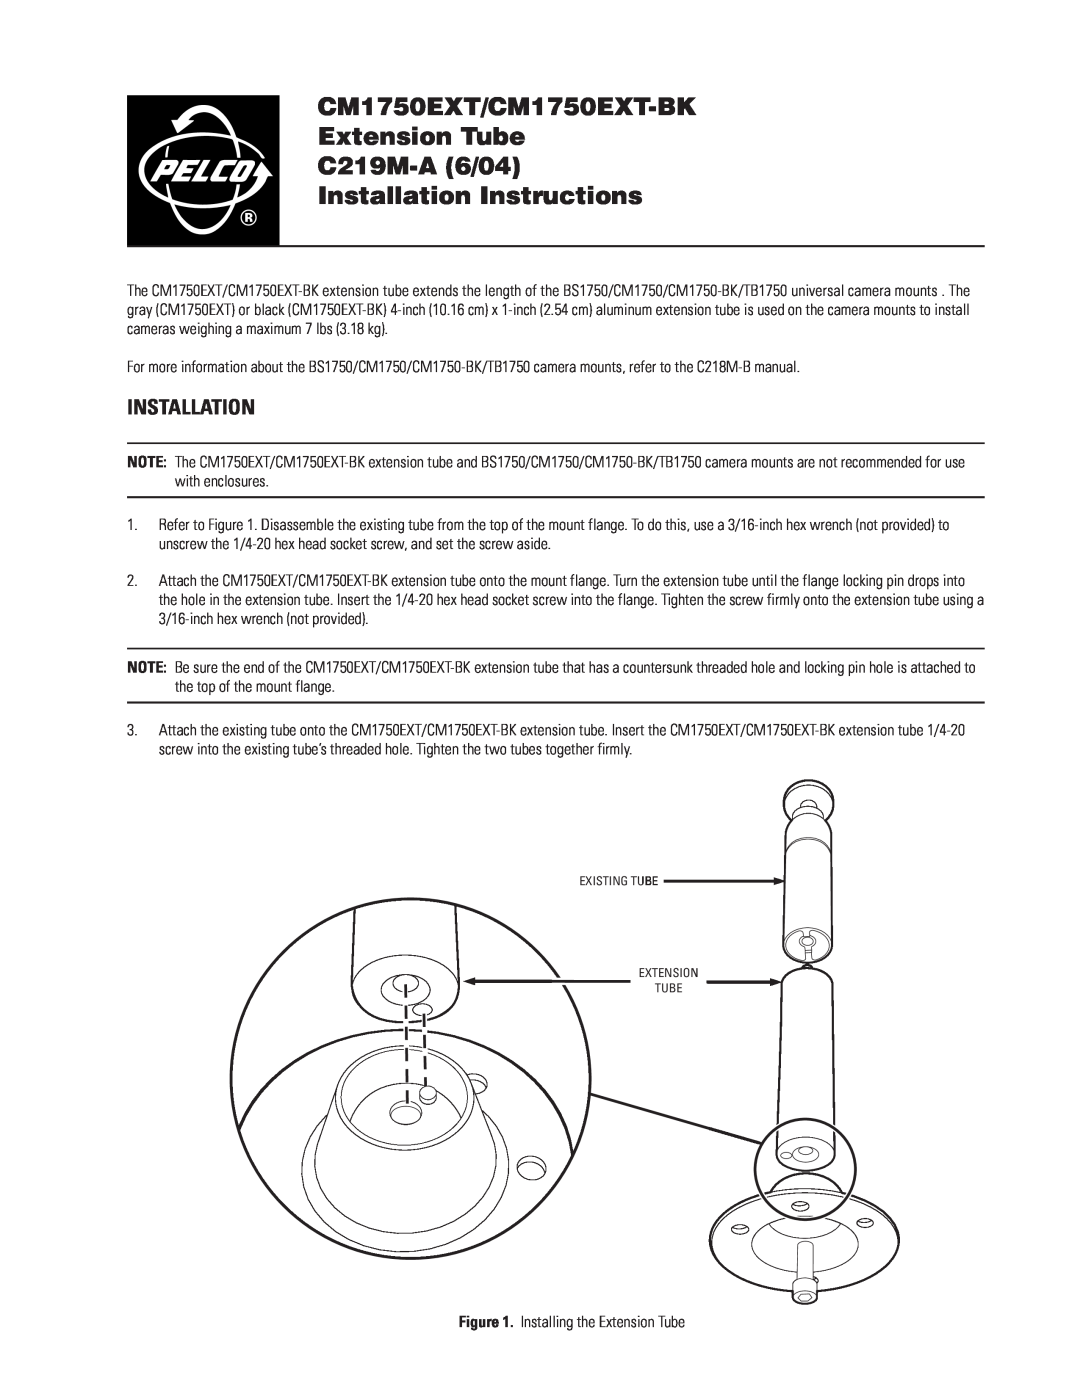 Pelco installation instructions CM1750EXT/CM1750EXT-BK Extension Tube C219M-A6/04, Installation Instructions 